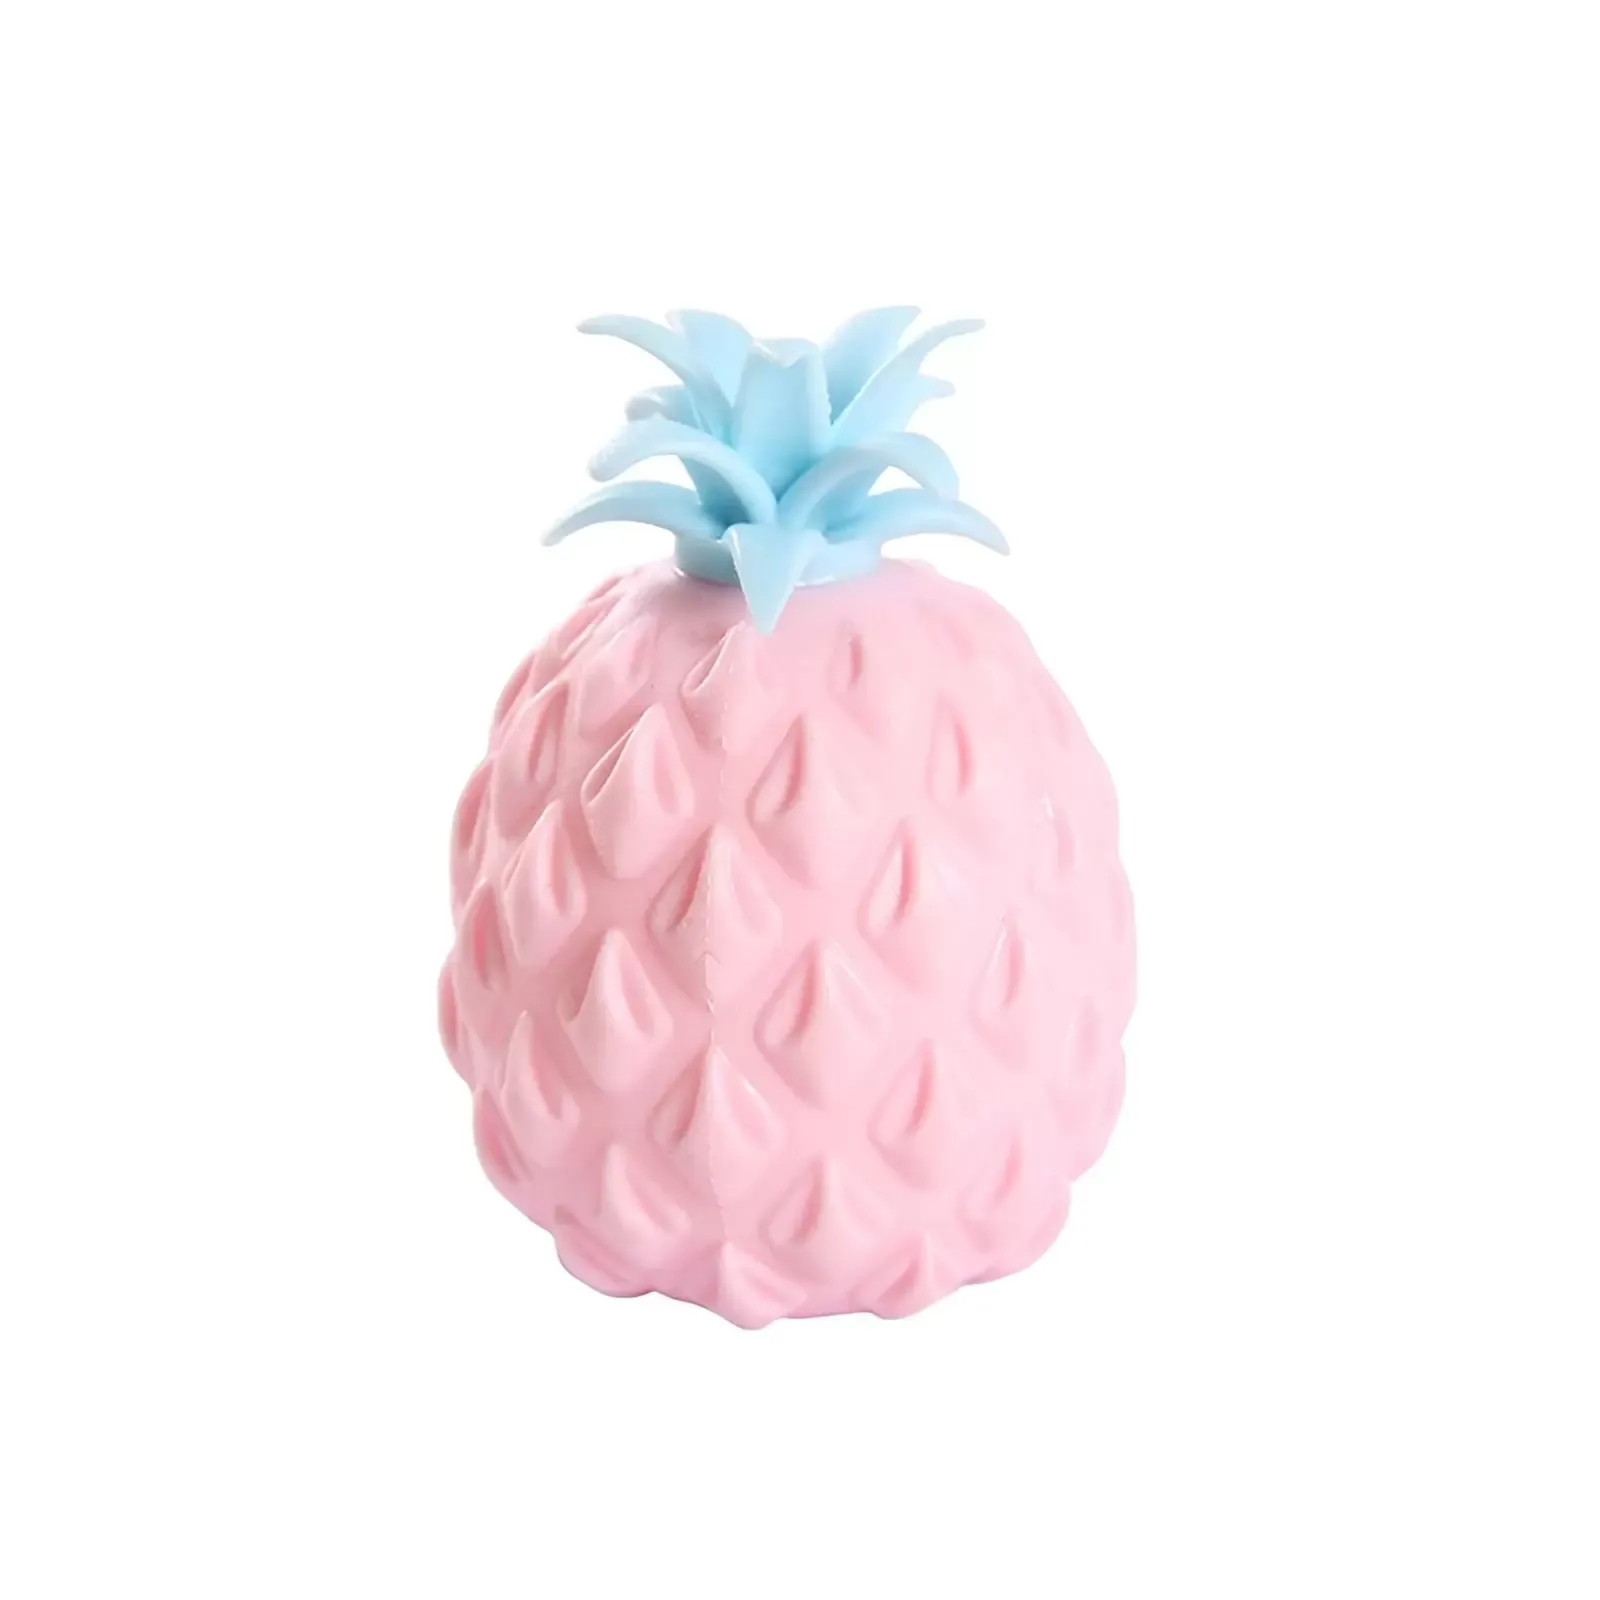 Cheap Flour Pineapple Relief Stress Balls Fidget Toys Squeeze Fruit Anti Stress Decompression for Kids Antistress Children FY4719 sxmy20